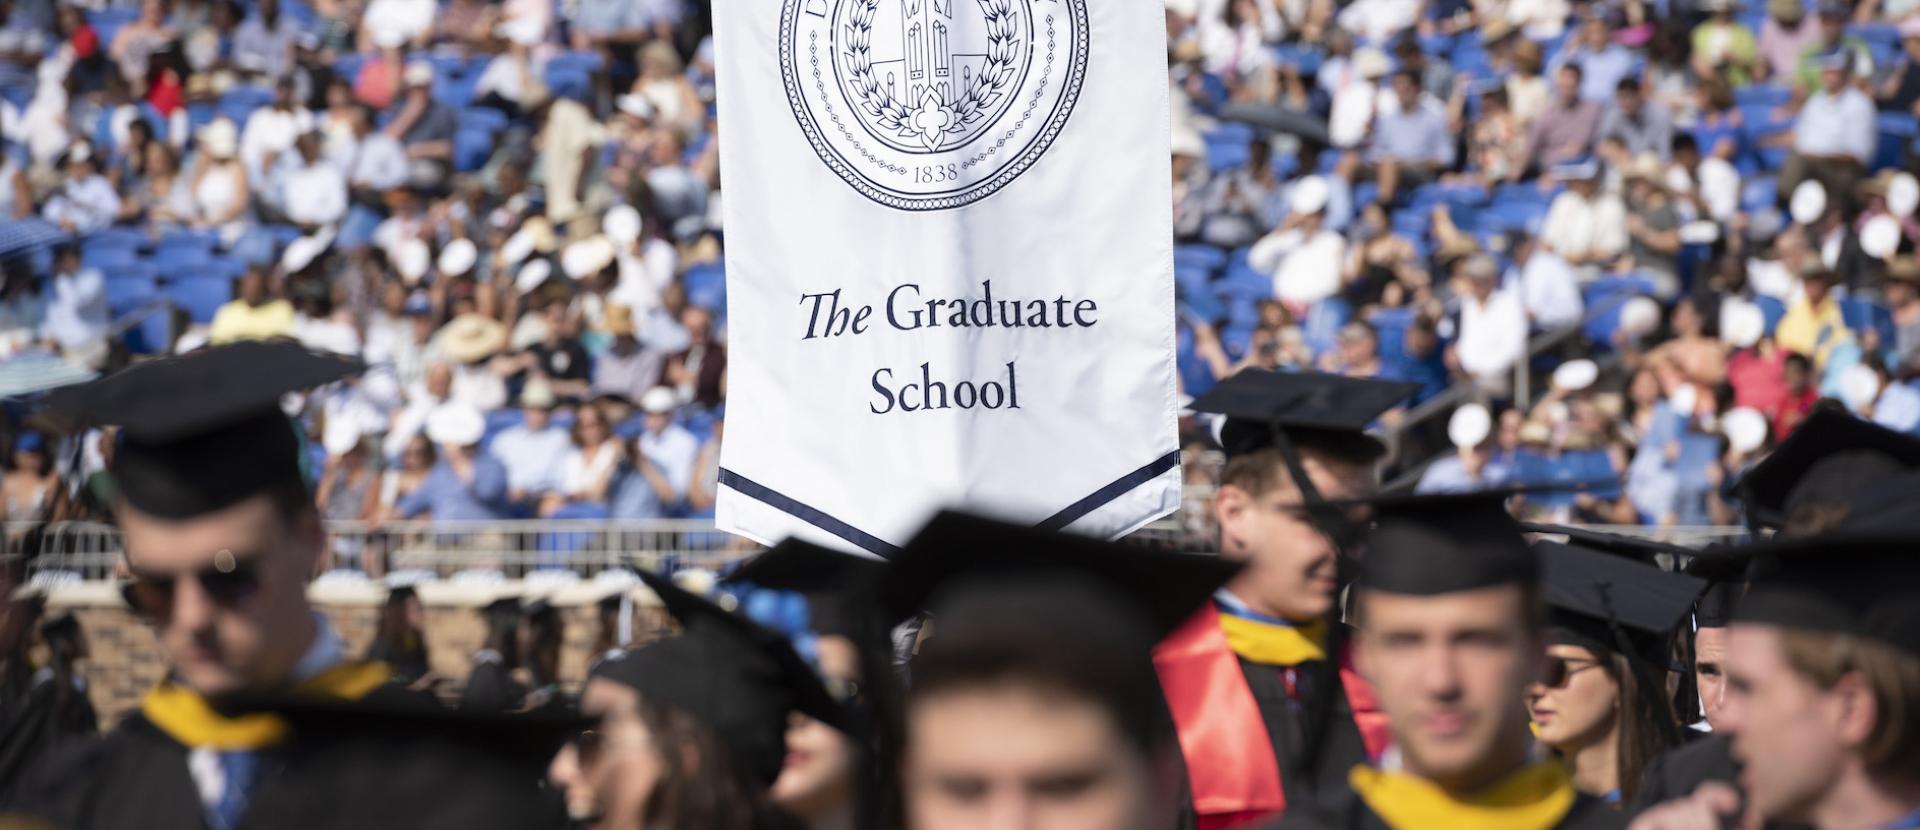 Graduate school banner at graduation in sea of graduates.